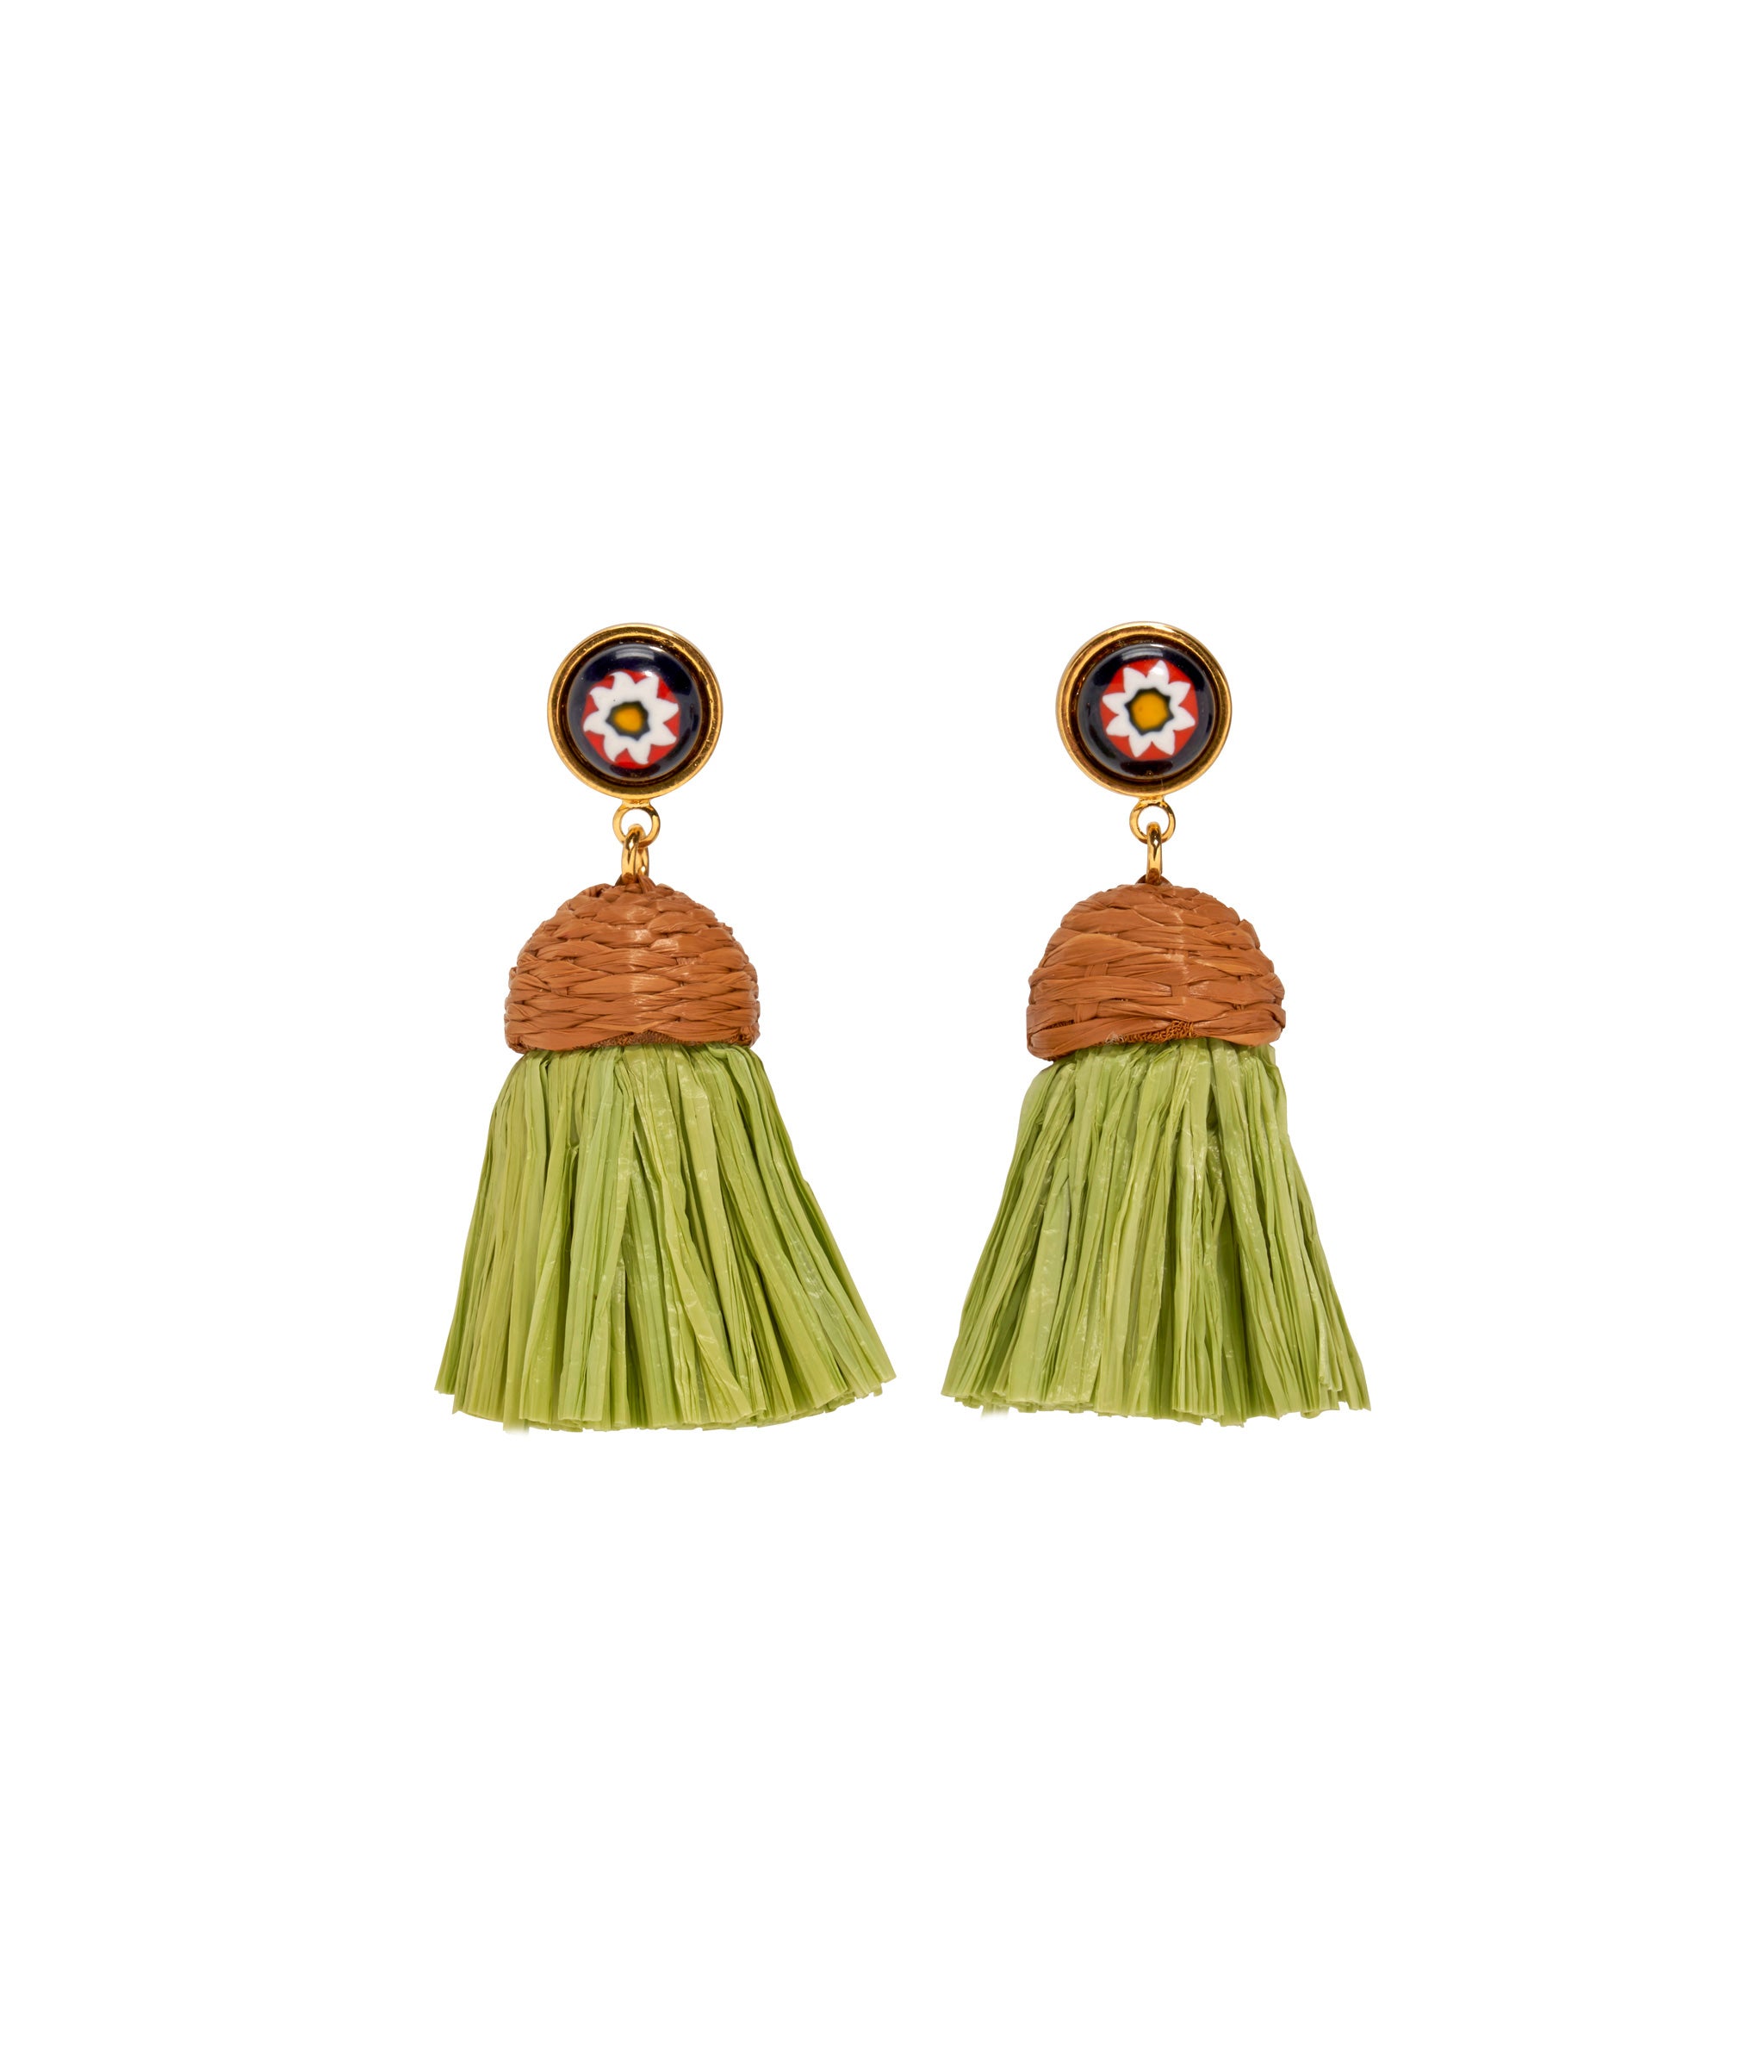 Raffia Earrings in Floral Palm. Gold-plated brass, millefiori glass tops, grass green raffia fringe.